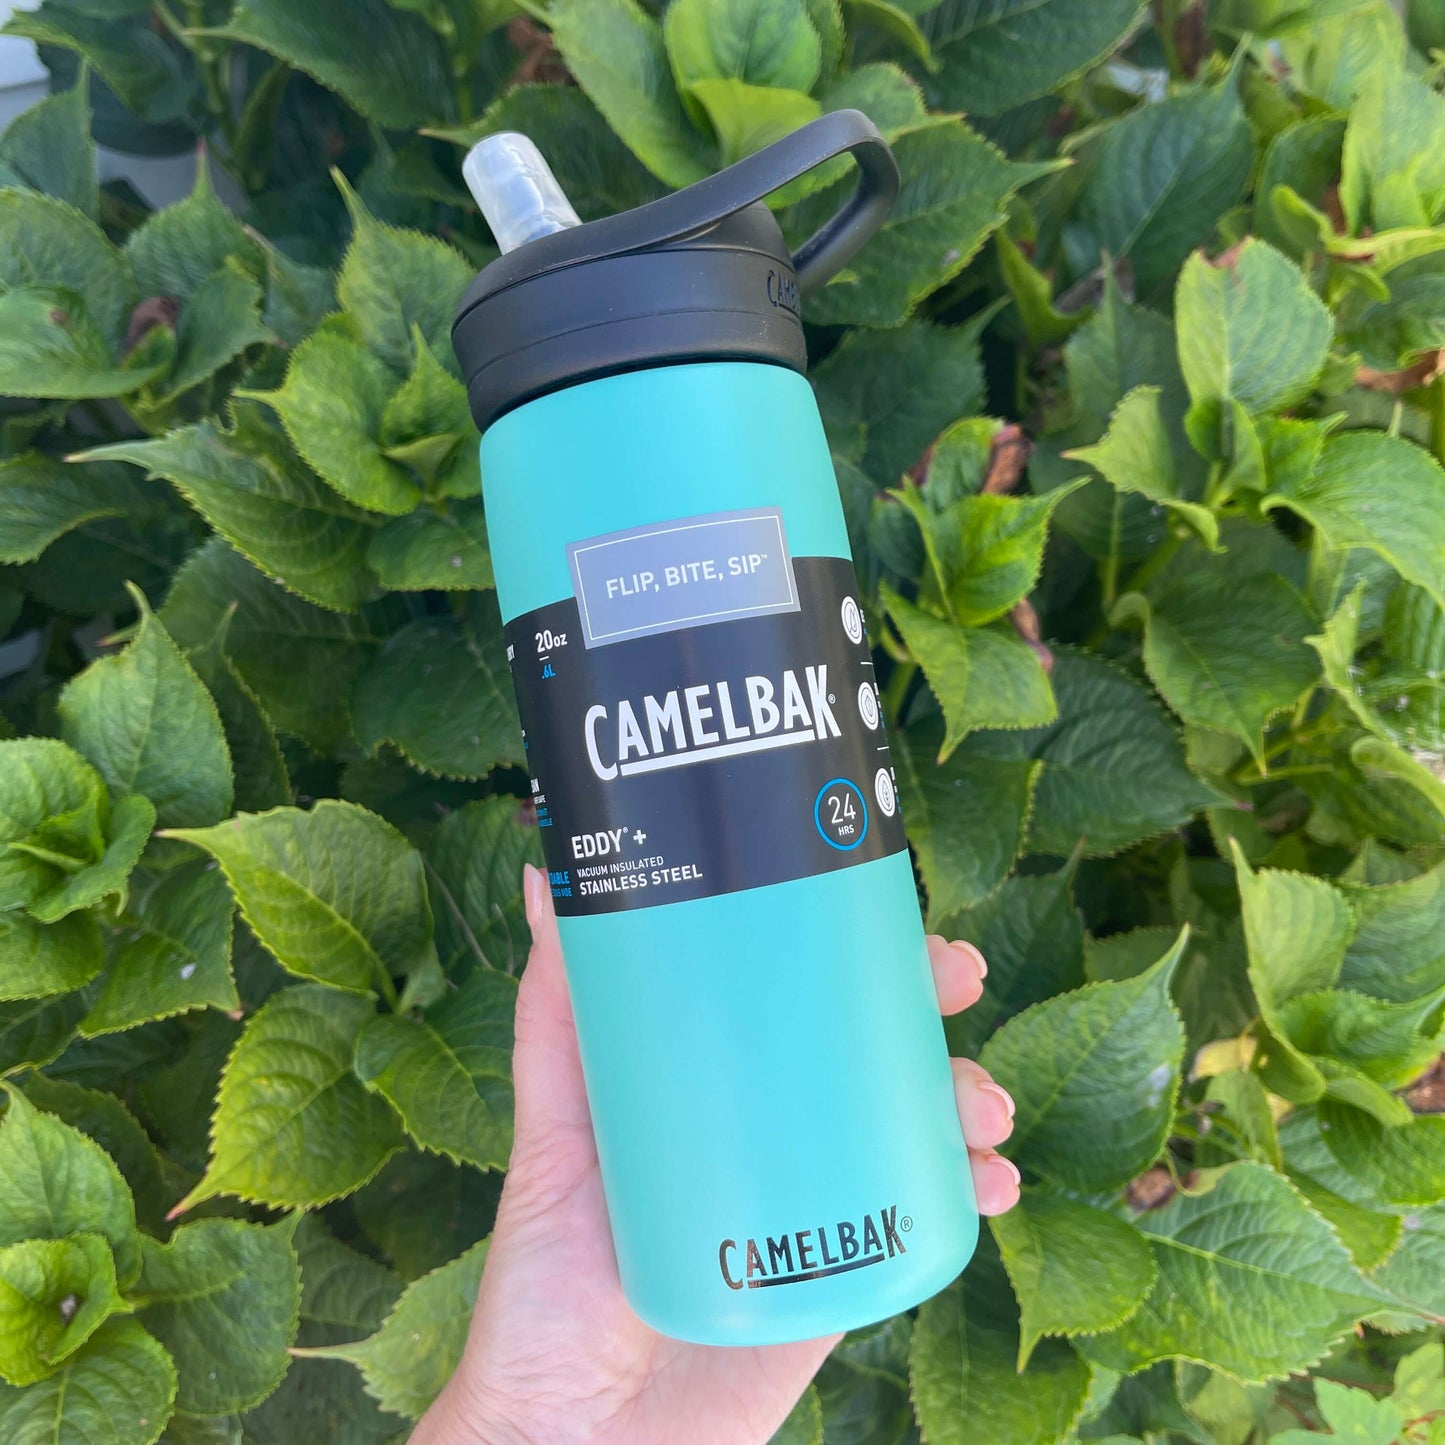 Camelbak stainless steel drink bottle in Coastal blue green colour.